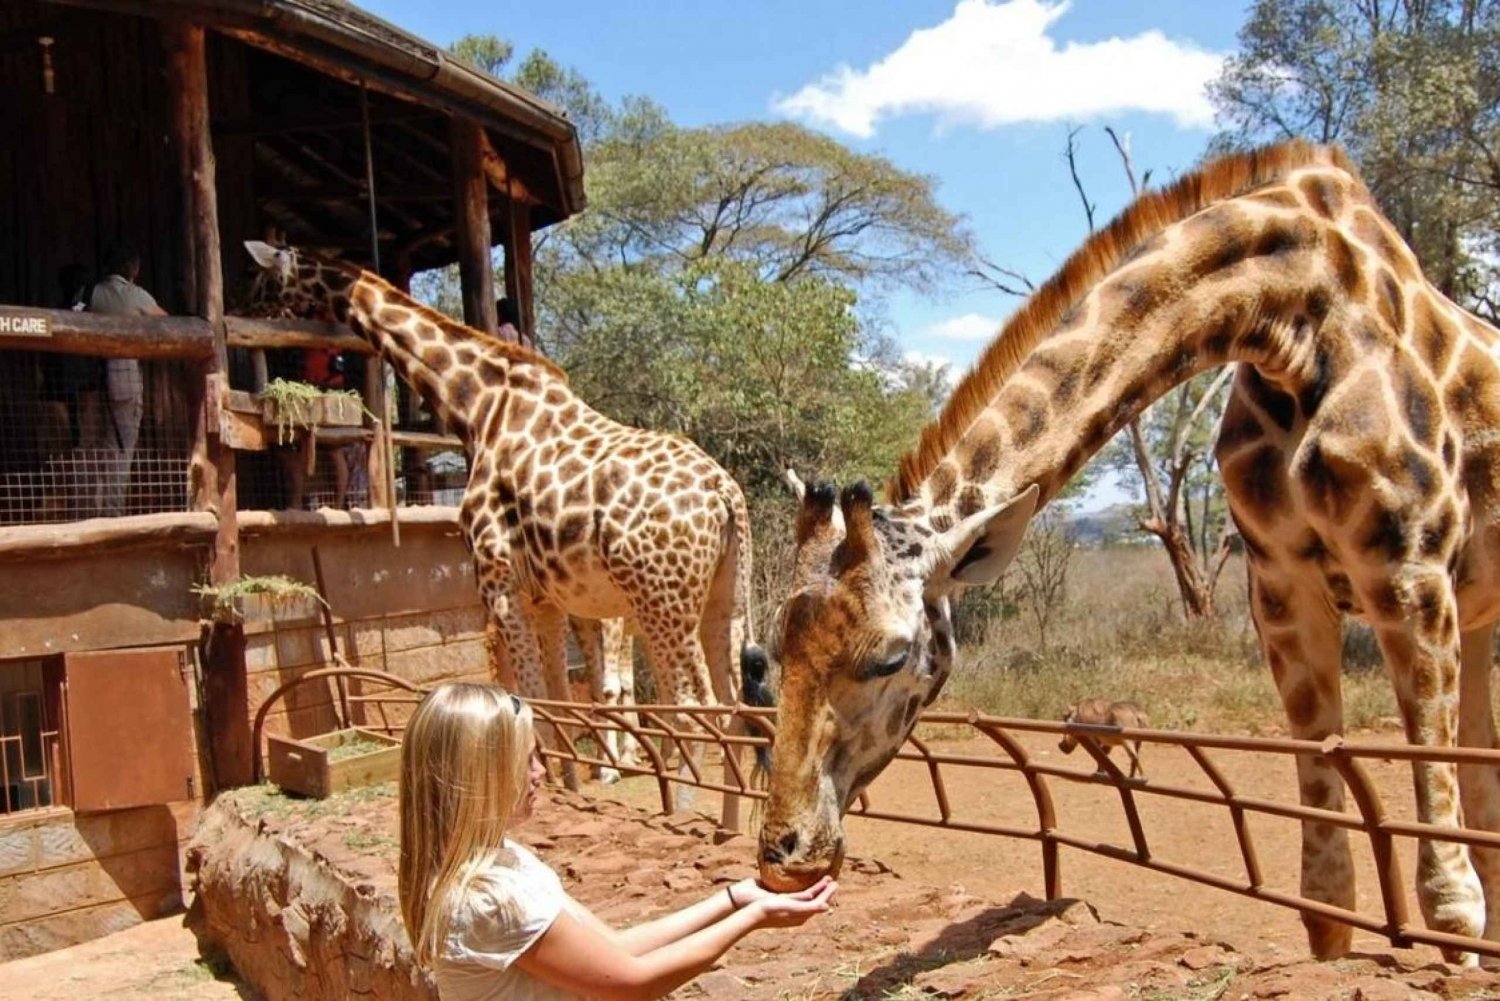 Nairobi Park, elefant, giraf, bomas og middag med kødædende dyr